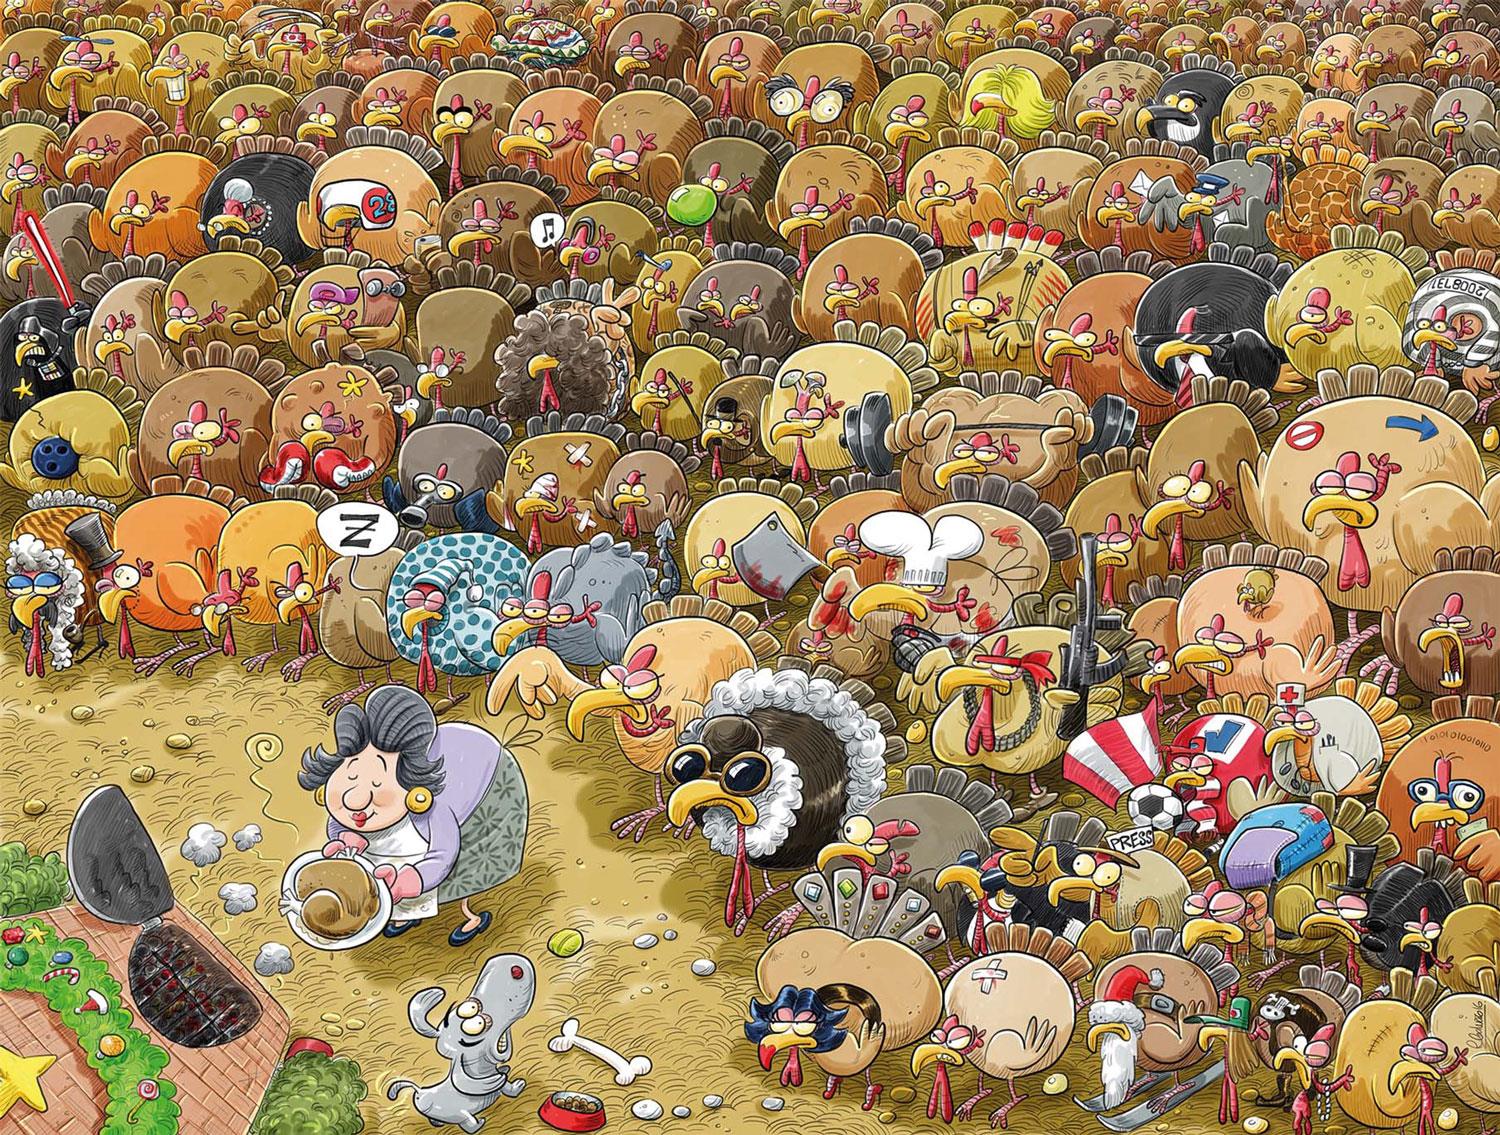 Chaos at Turkey Farm Jigsaw Puzzle - Chaos no.3 (1000 Pieces)